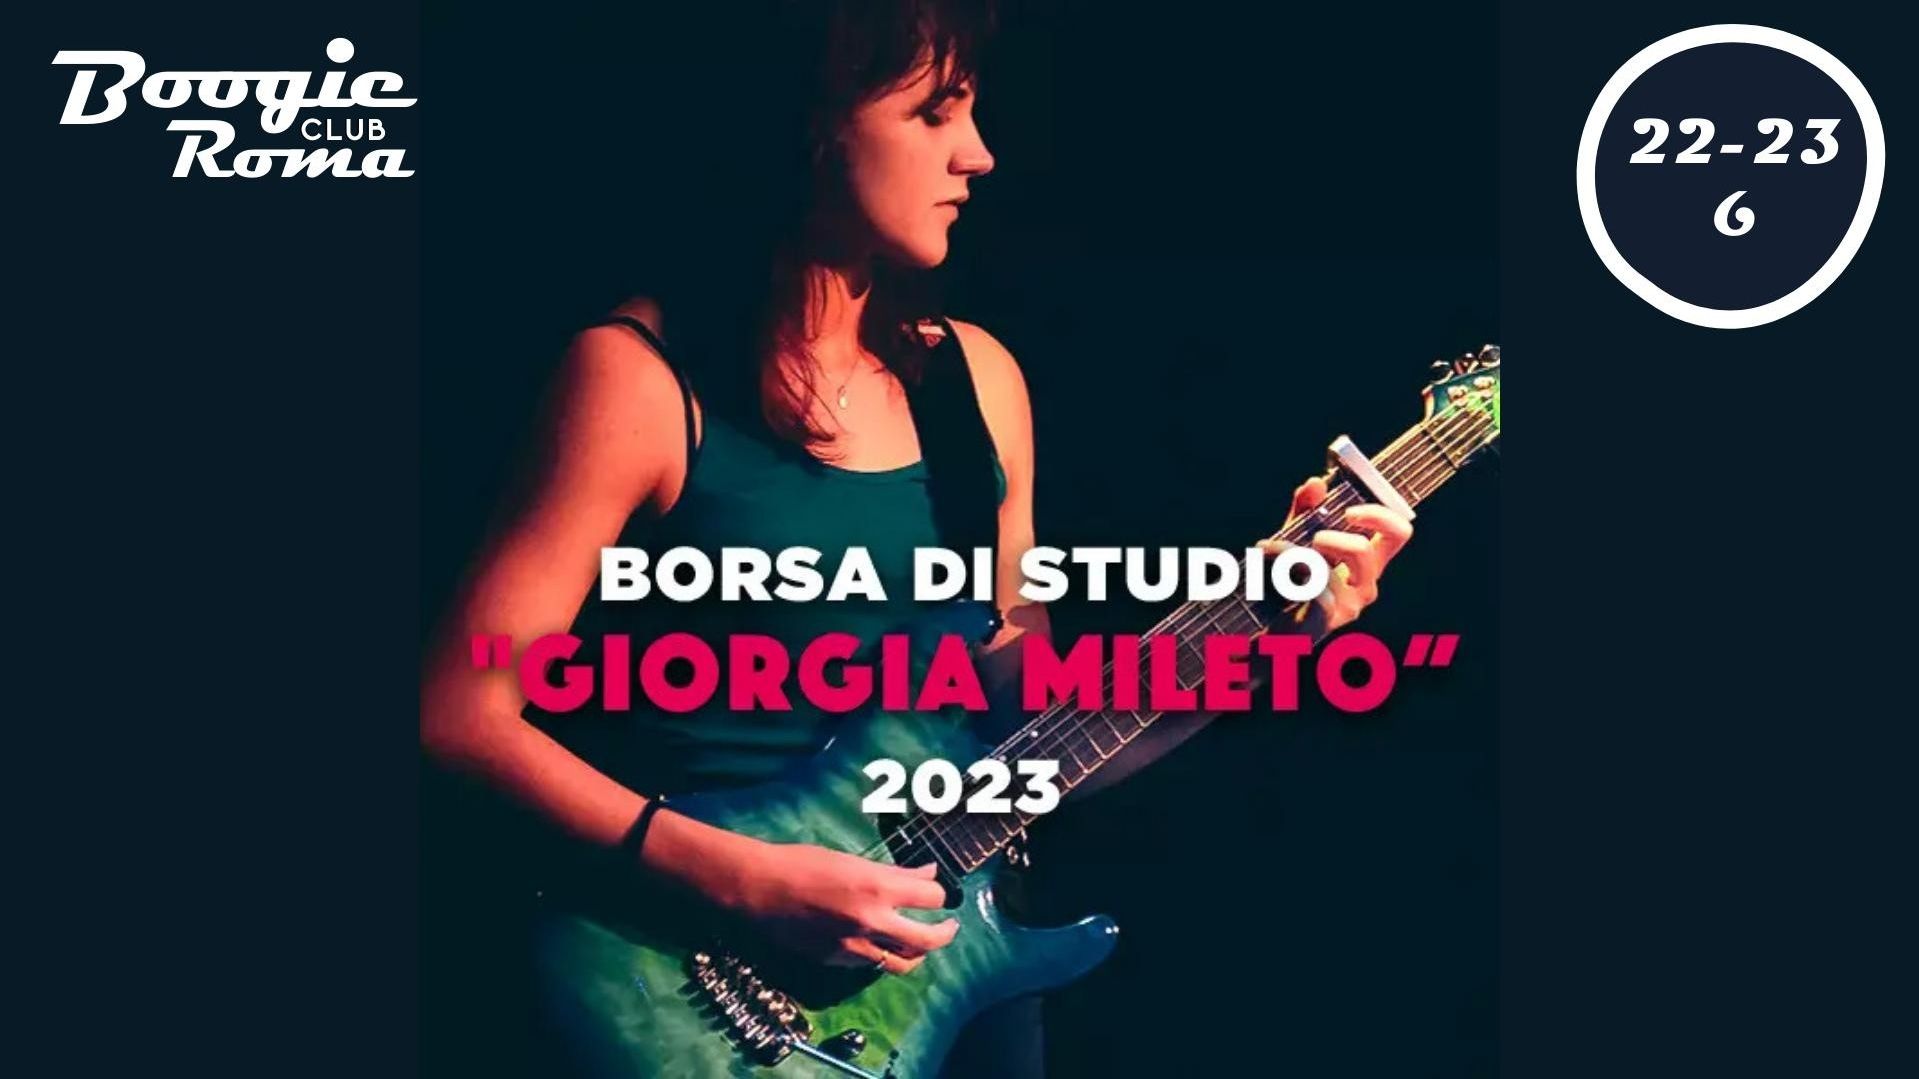 Borsa di Studio Giorgia Mileto 2023